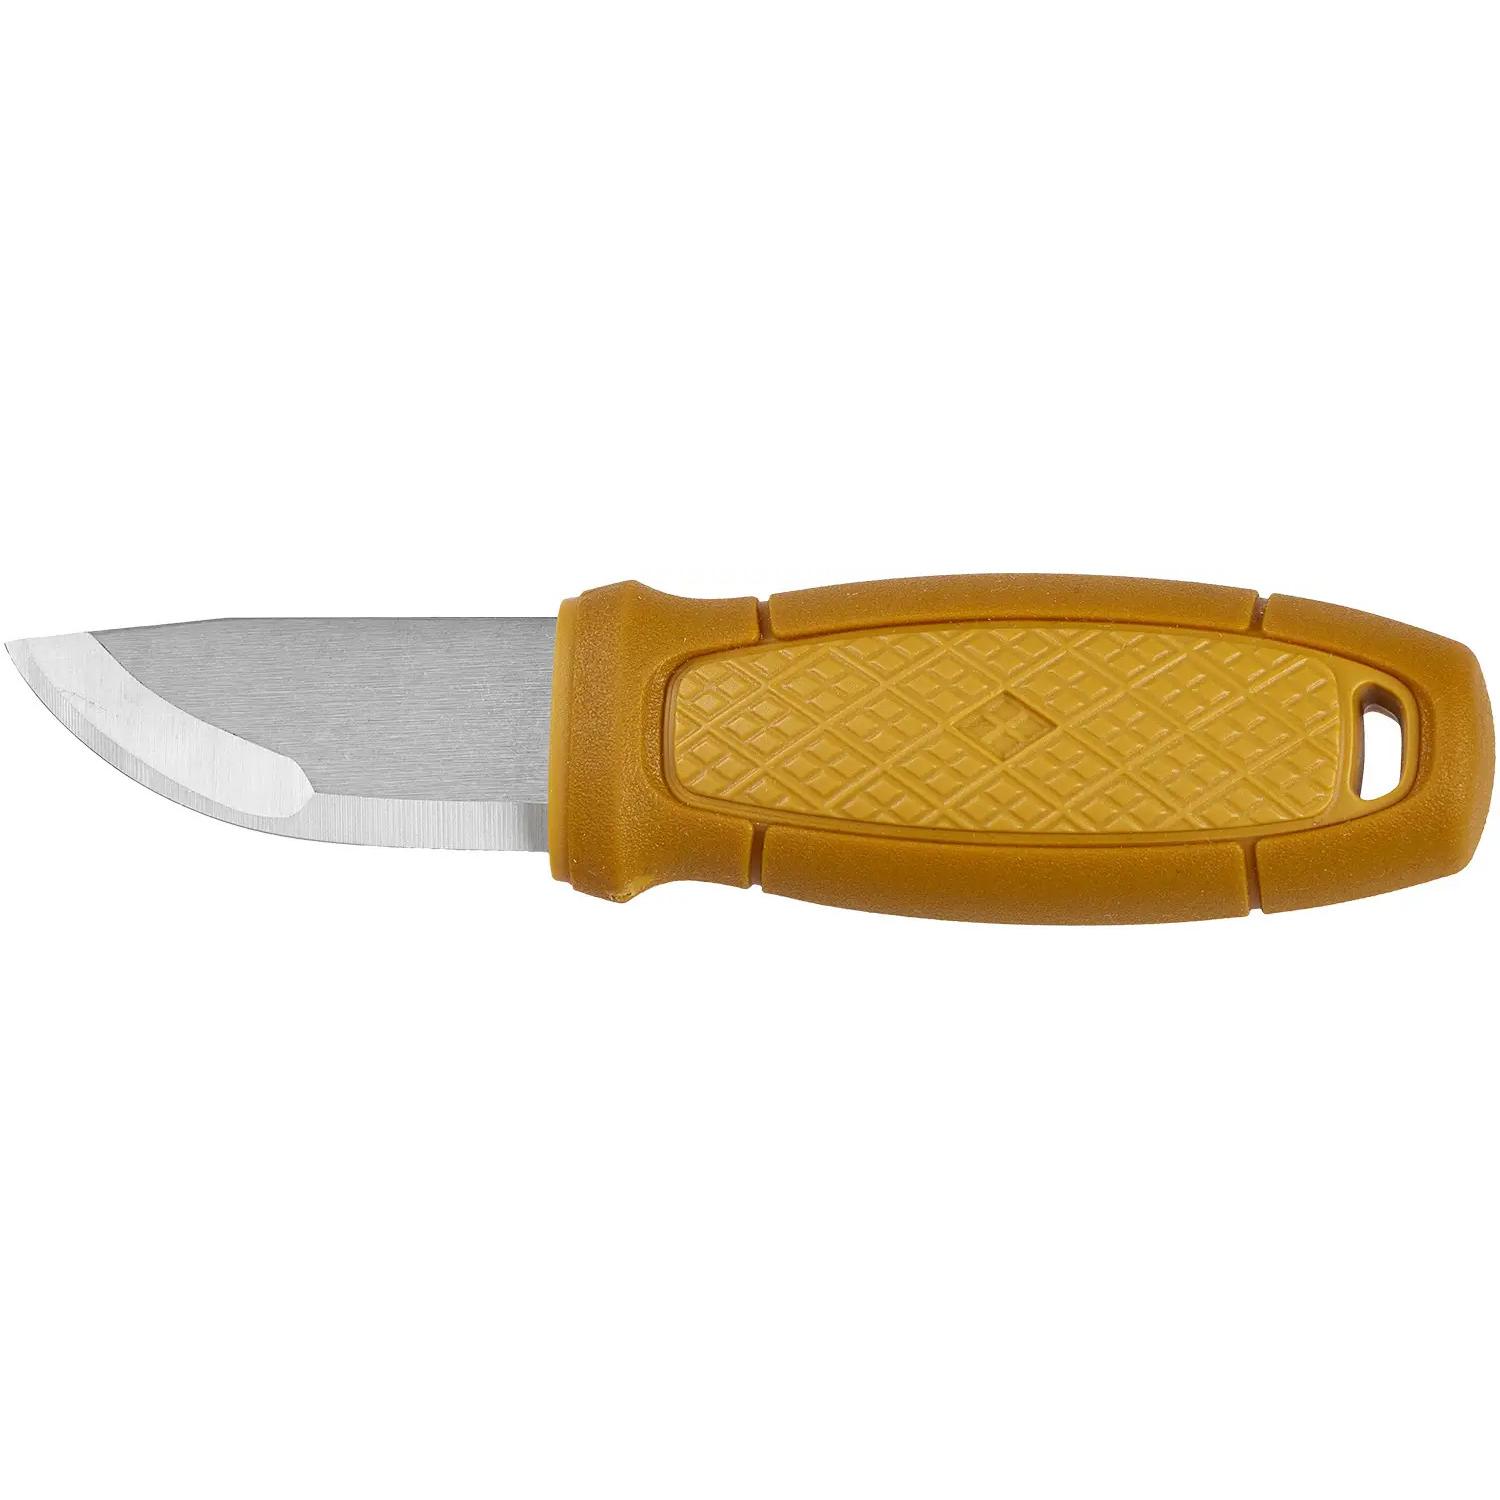 Нож Morakniv Eldris Neck Knife. Цвет - желтый 12632 2305.01.32